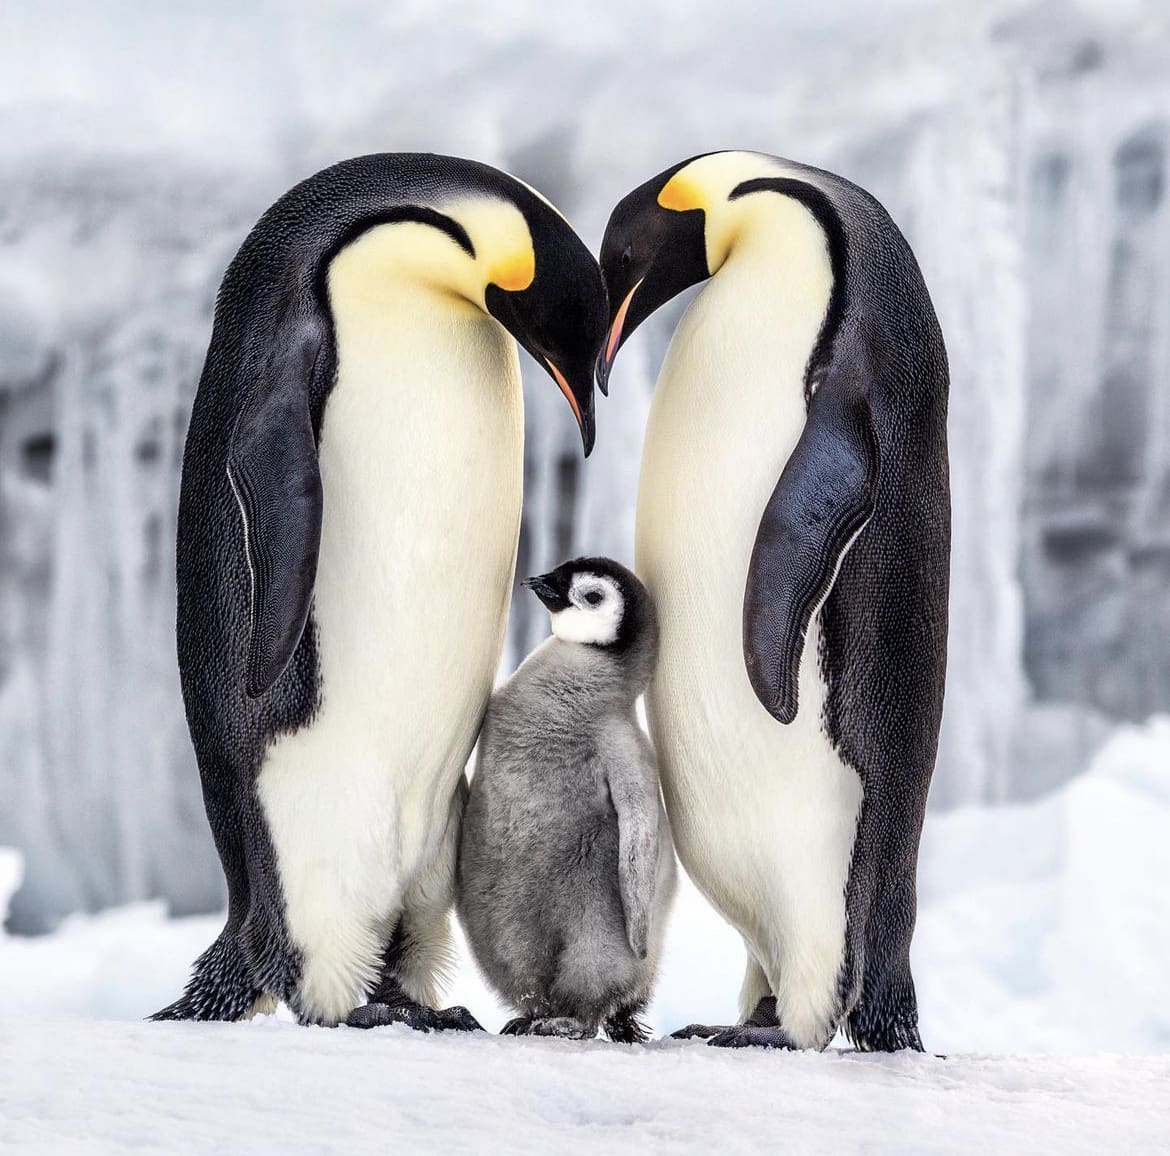 Emperor penguin family